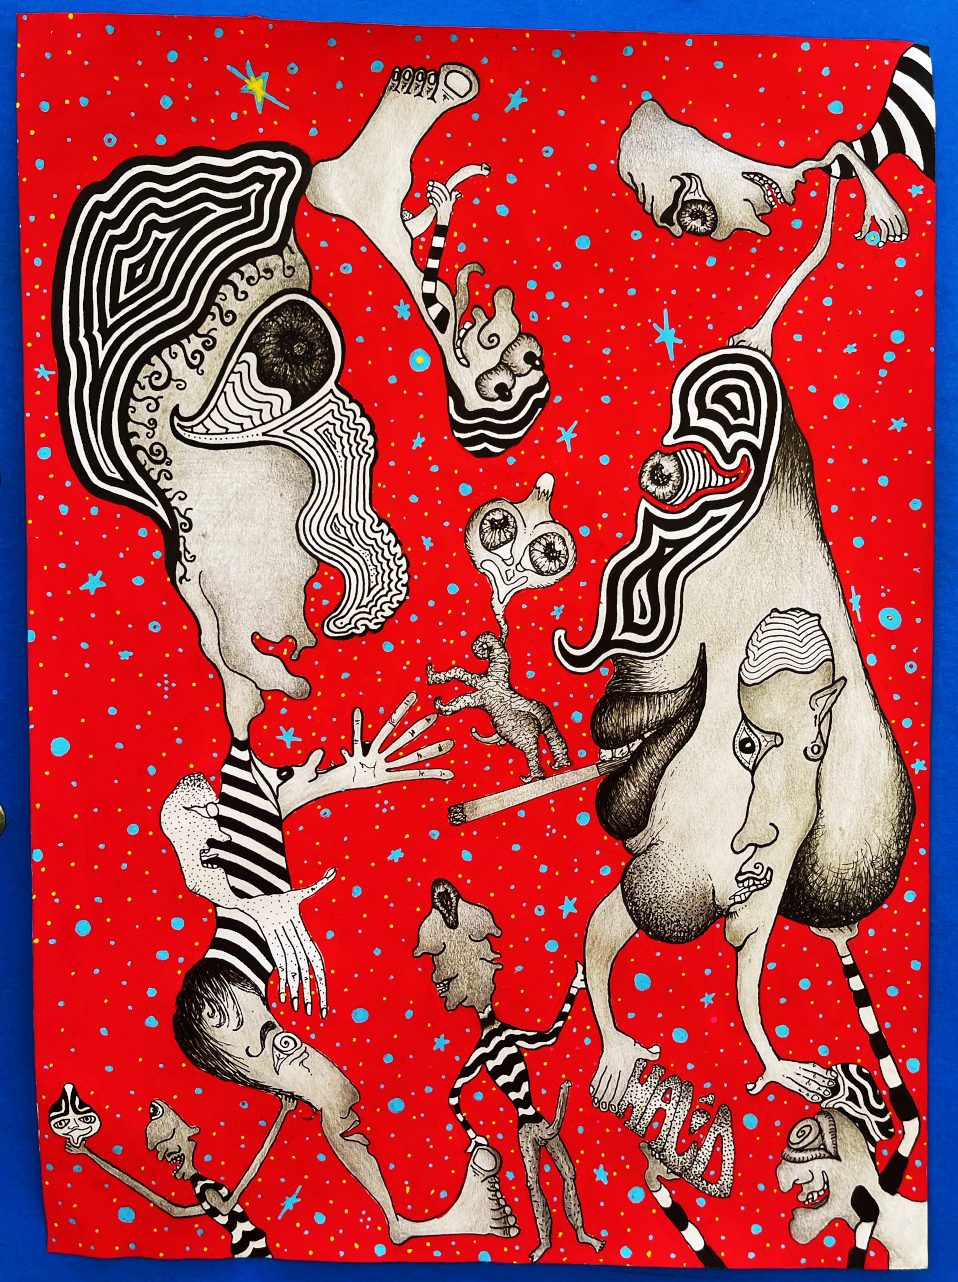 Halid Chrisinas Elaggan, Smoking Killed The Gorilla, collage - mixed media on paper, 42.5 x 32 cm, 2022